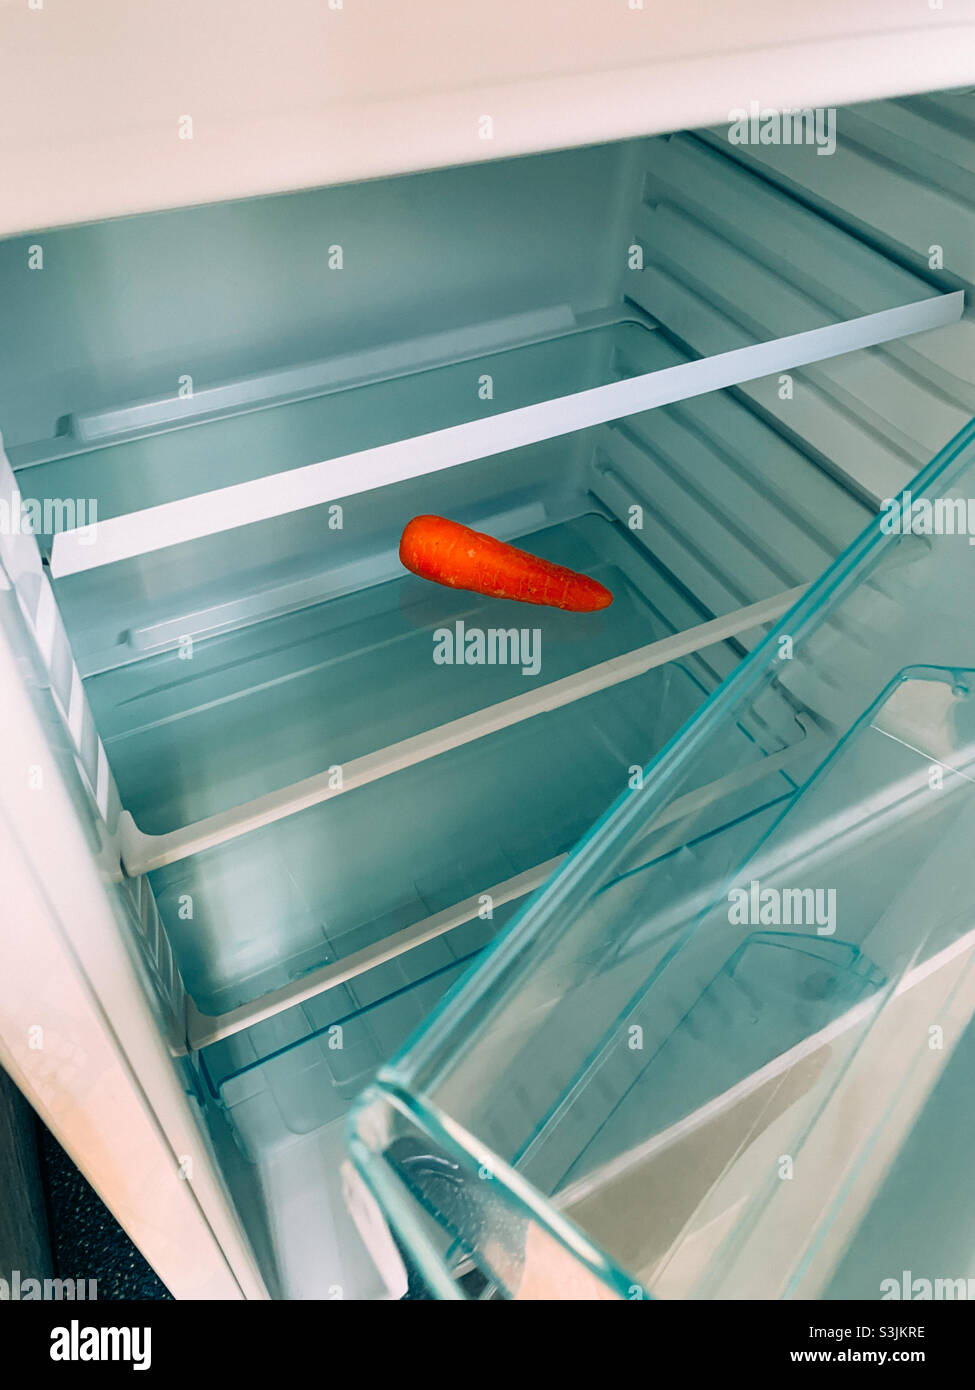 Single carrot on a shelf inside a refrigerator Stock Photo